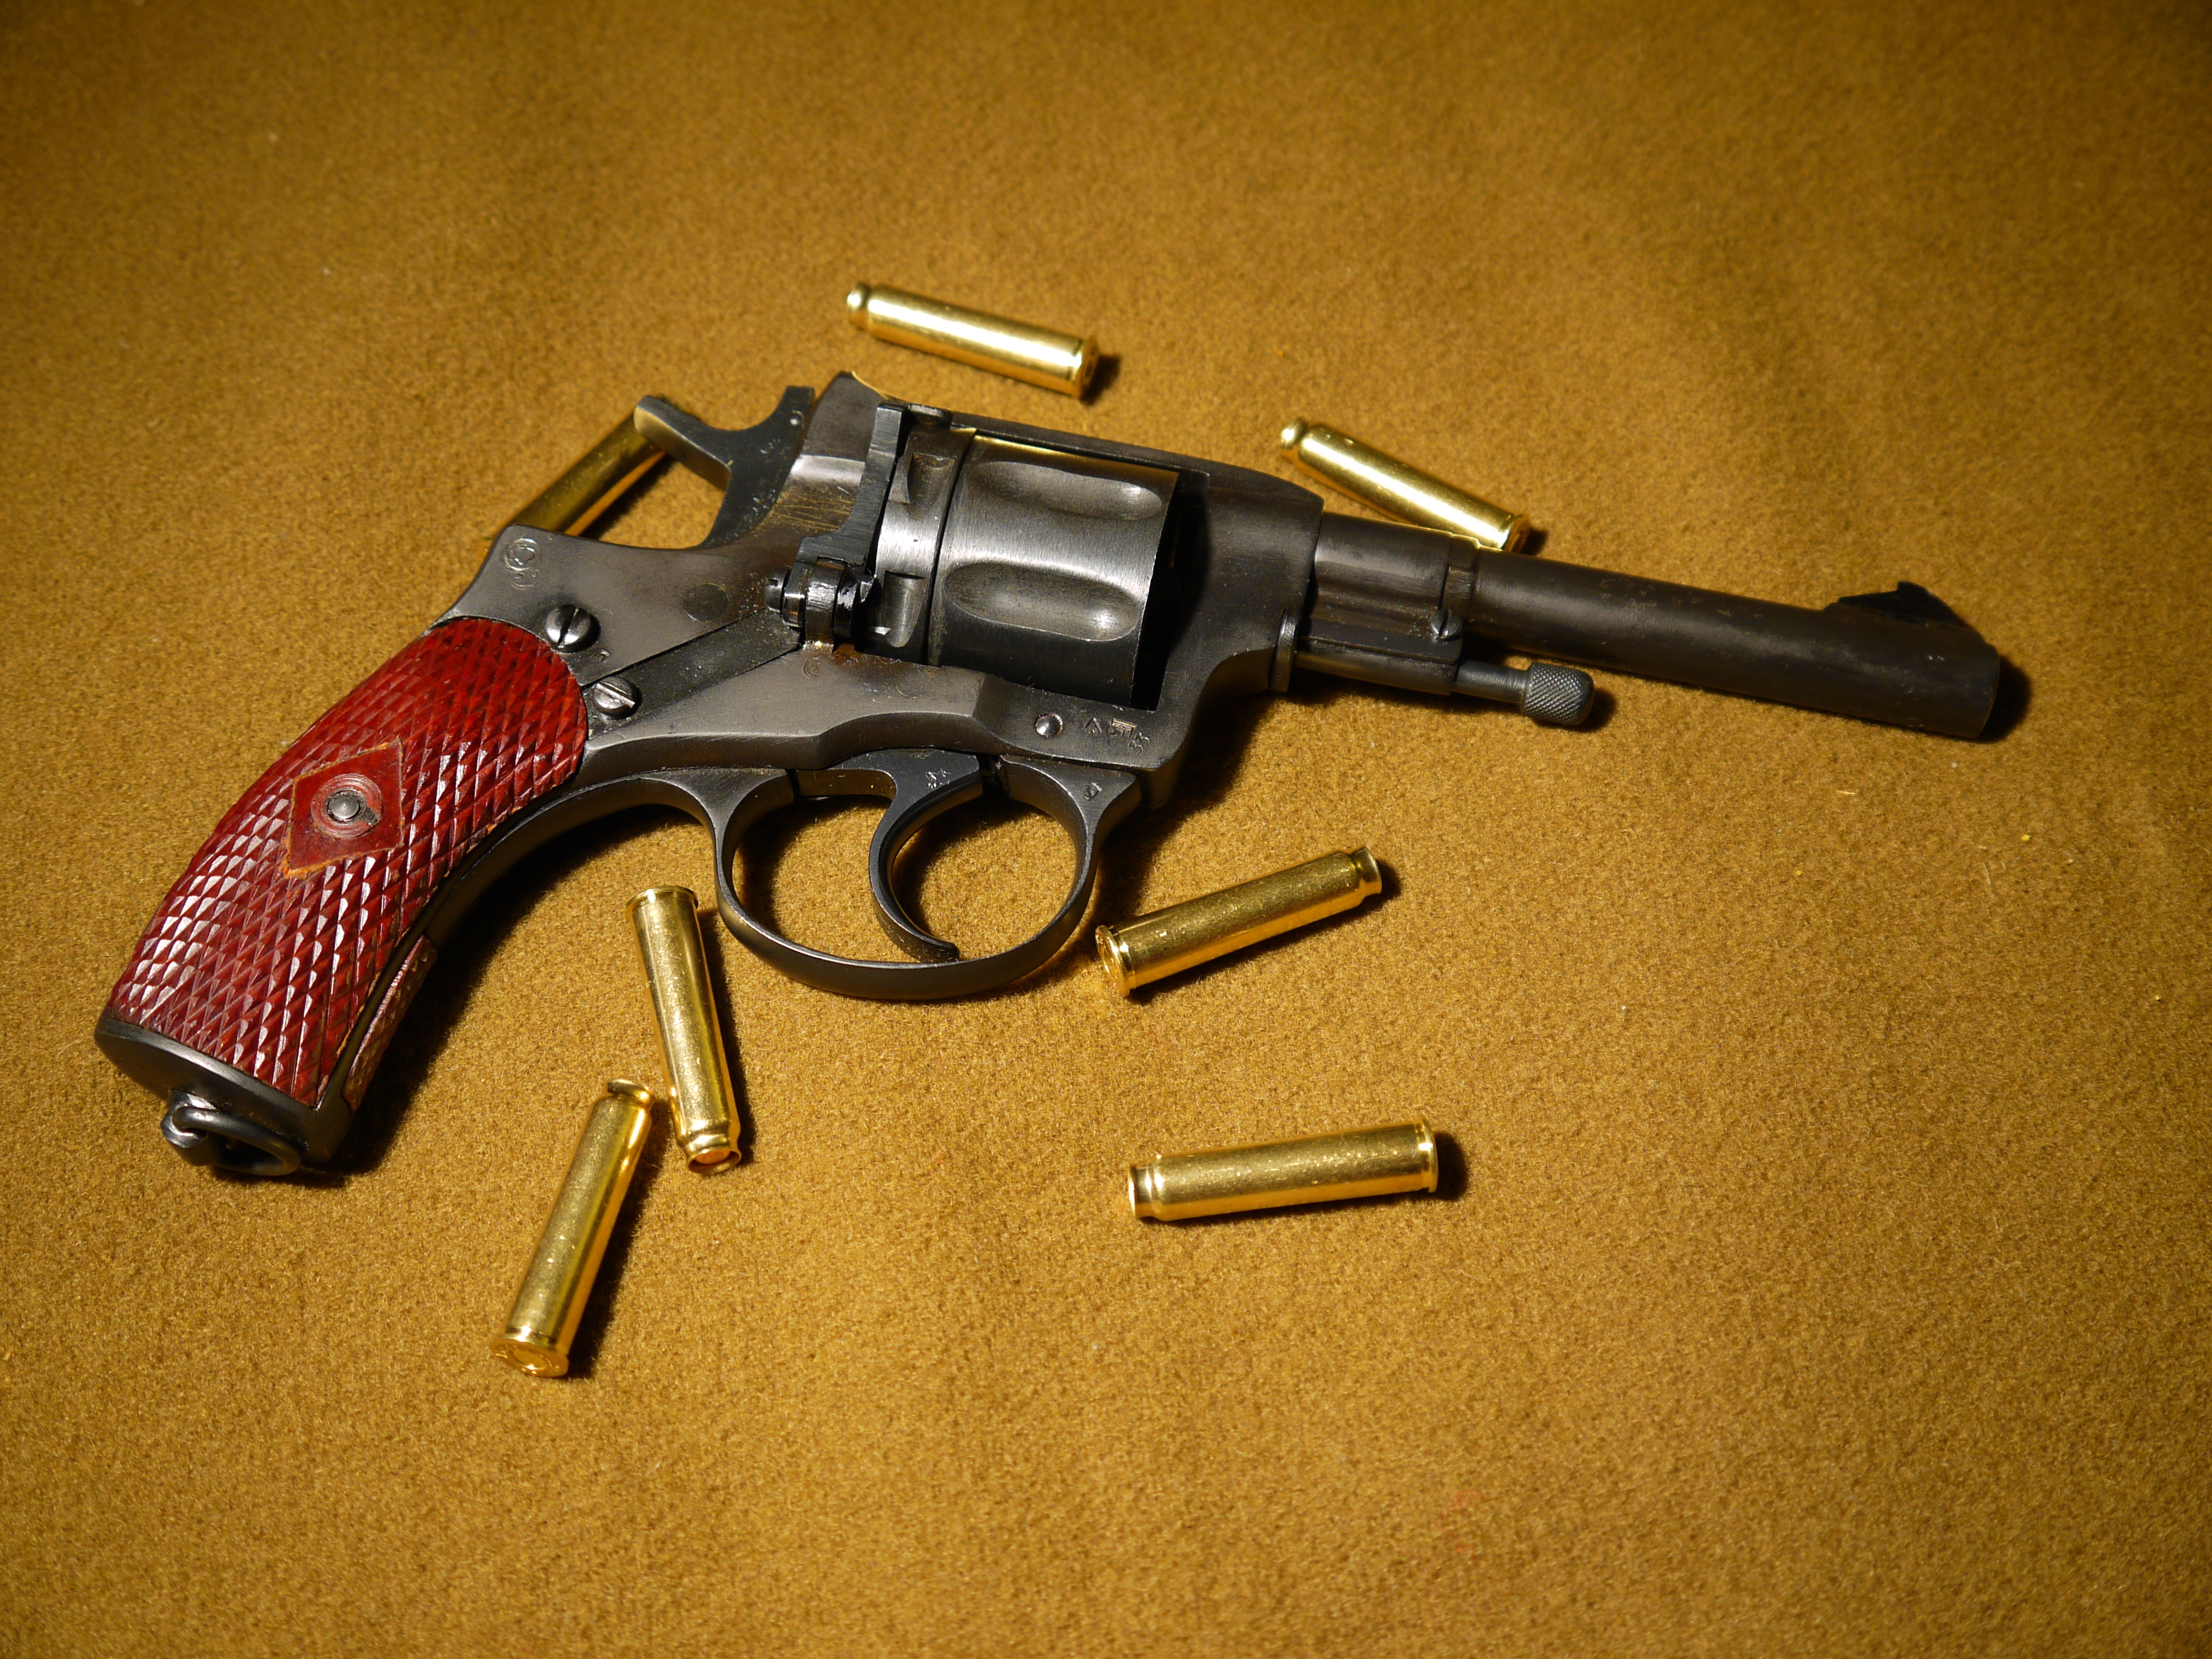 Nagant revolver serial numbers